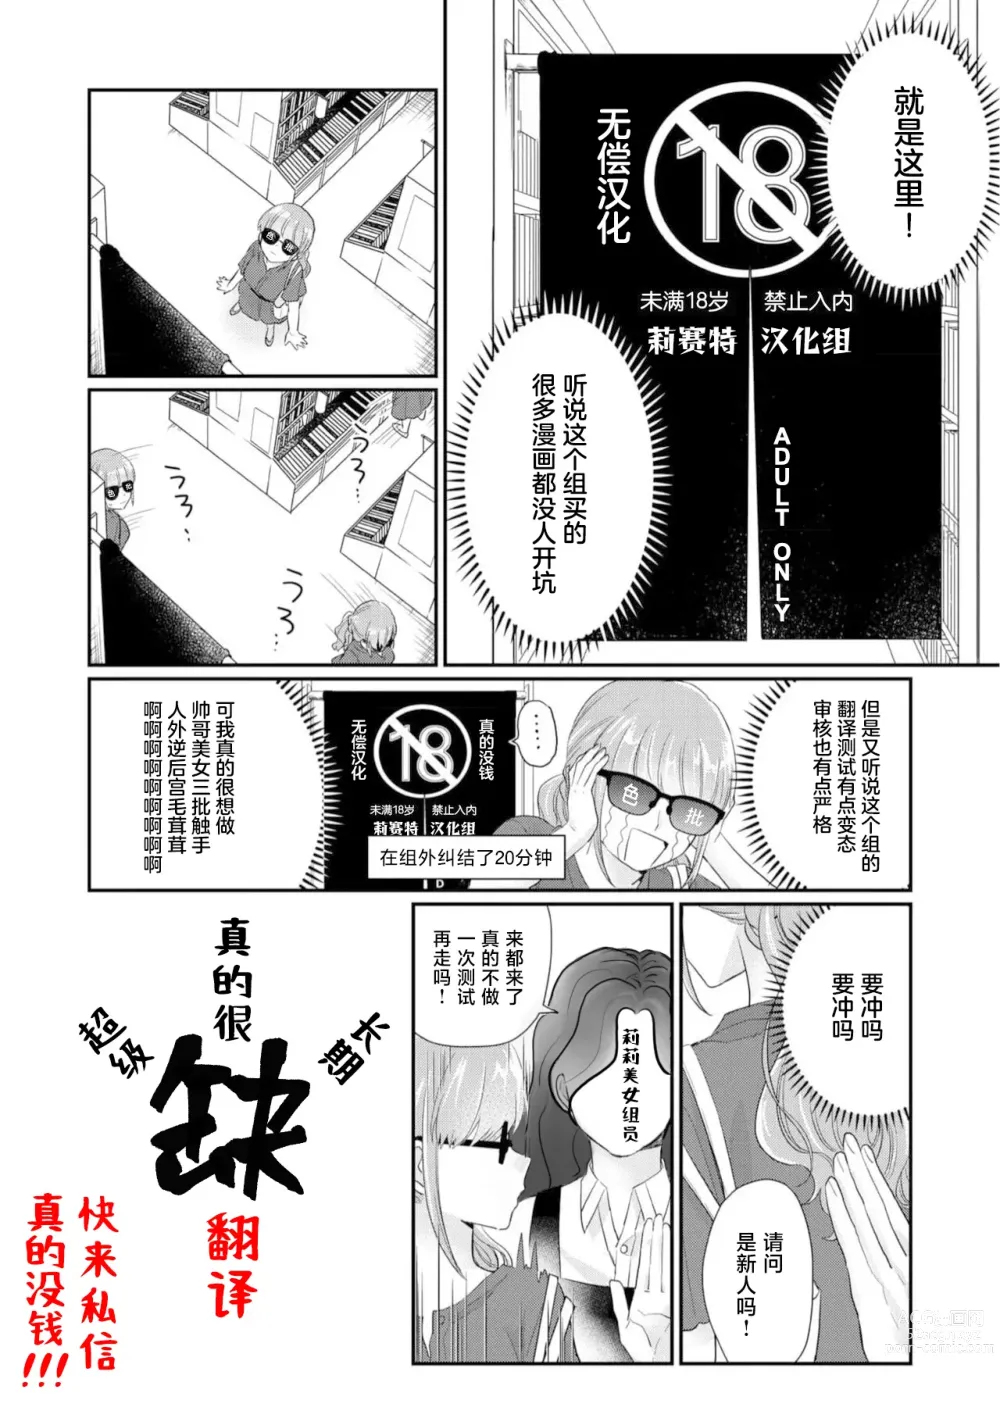 Page 68 of manga 浅叶老师专一的纯爱 1-2